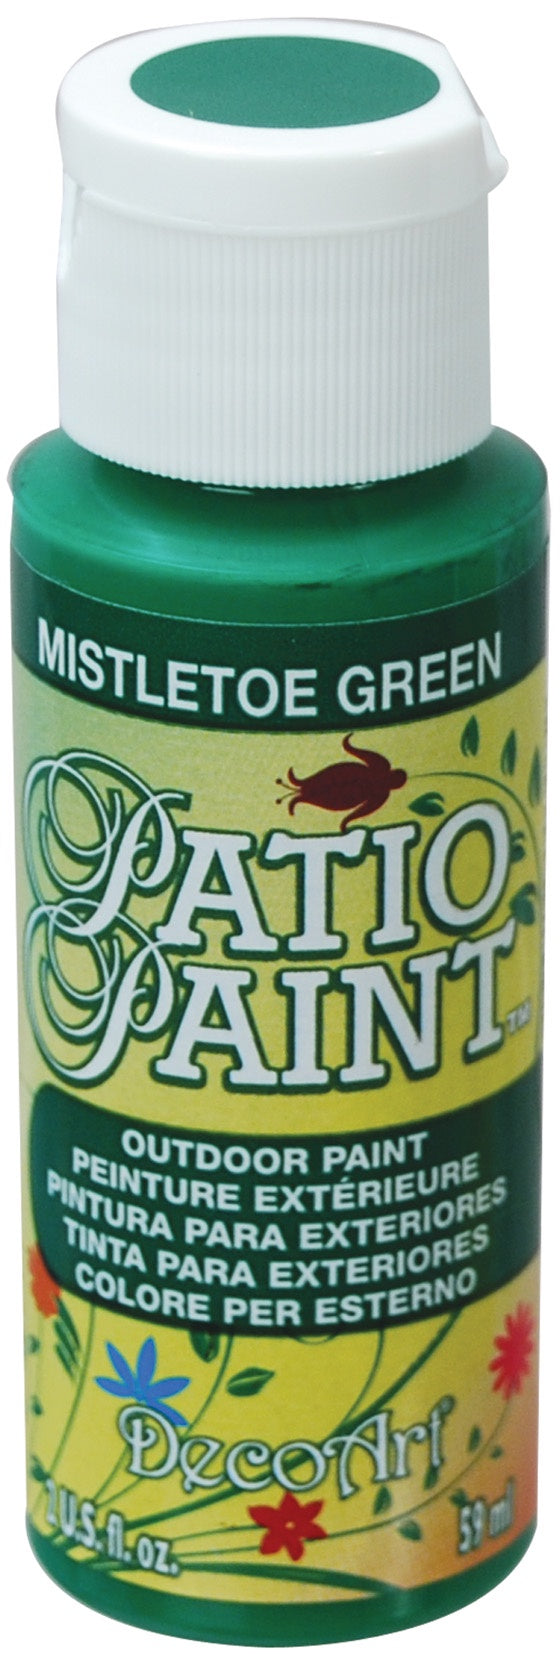 Deco Art Patio Paint 2oz - Mistletoe Green